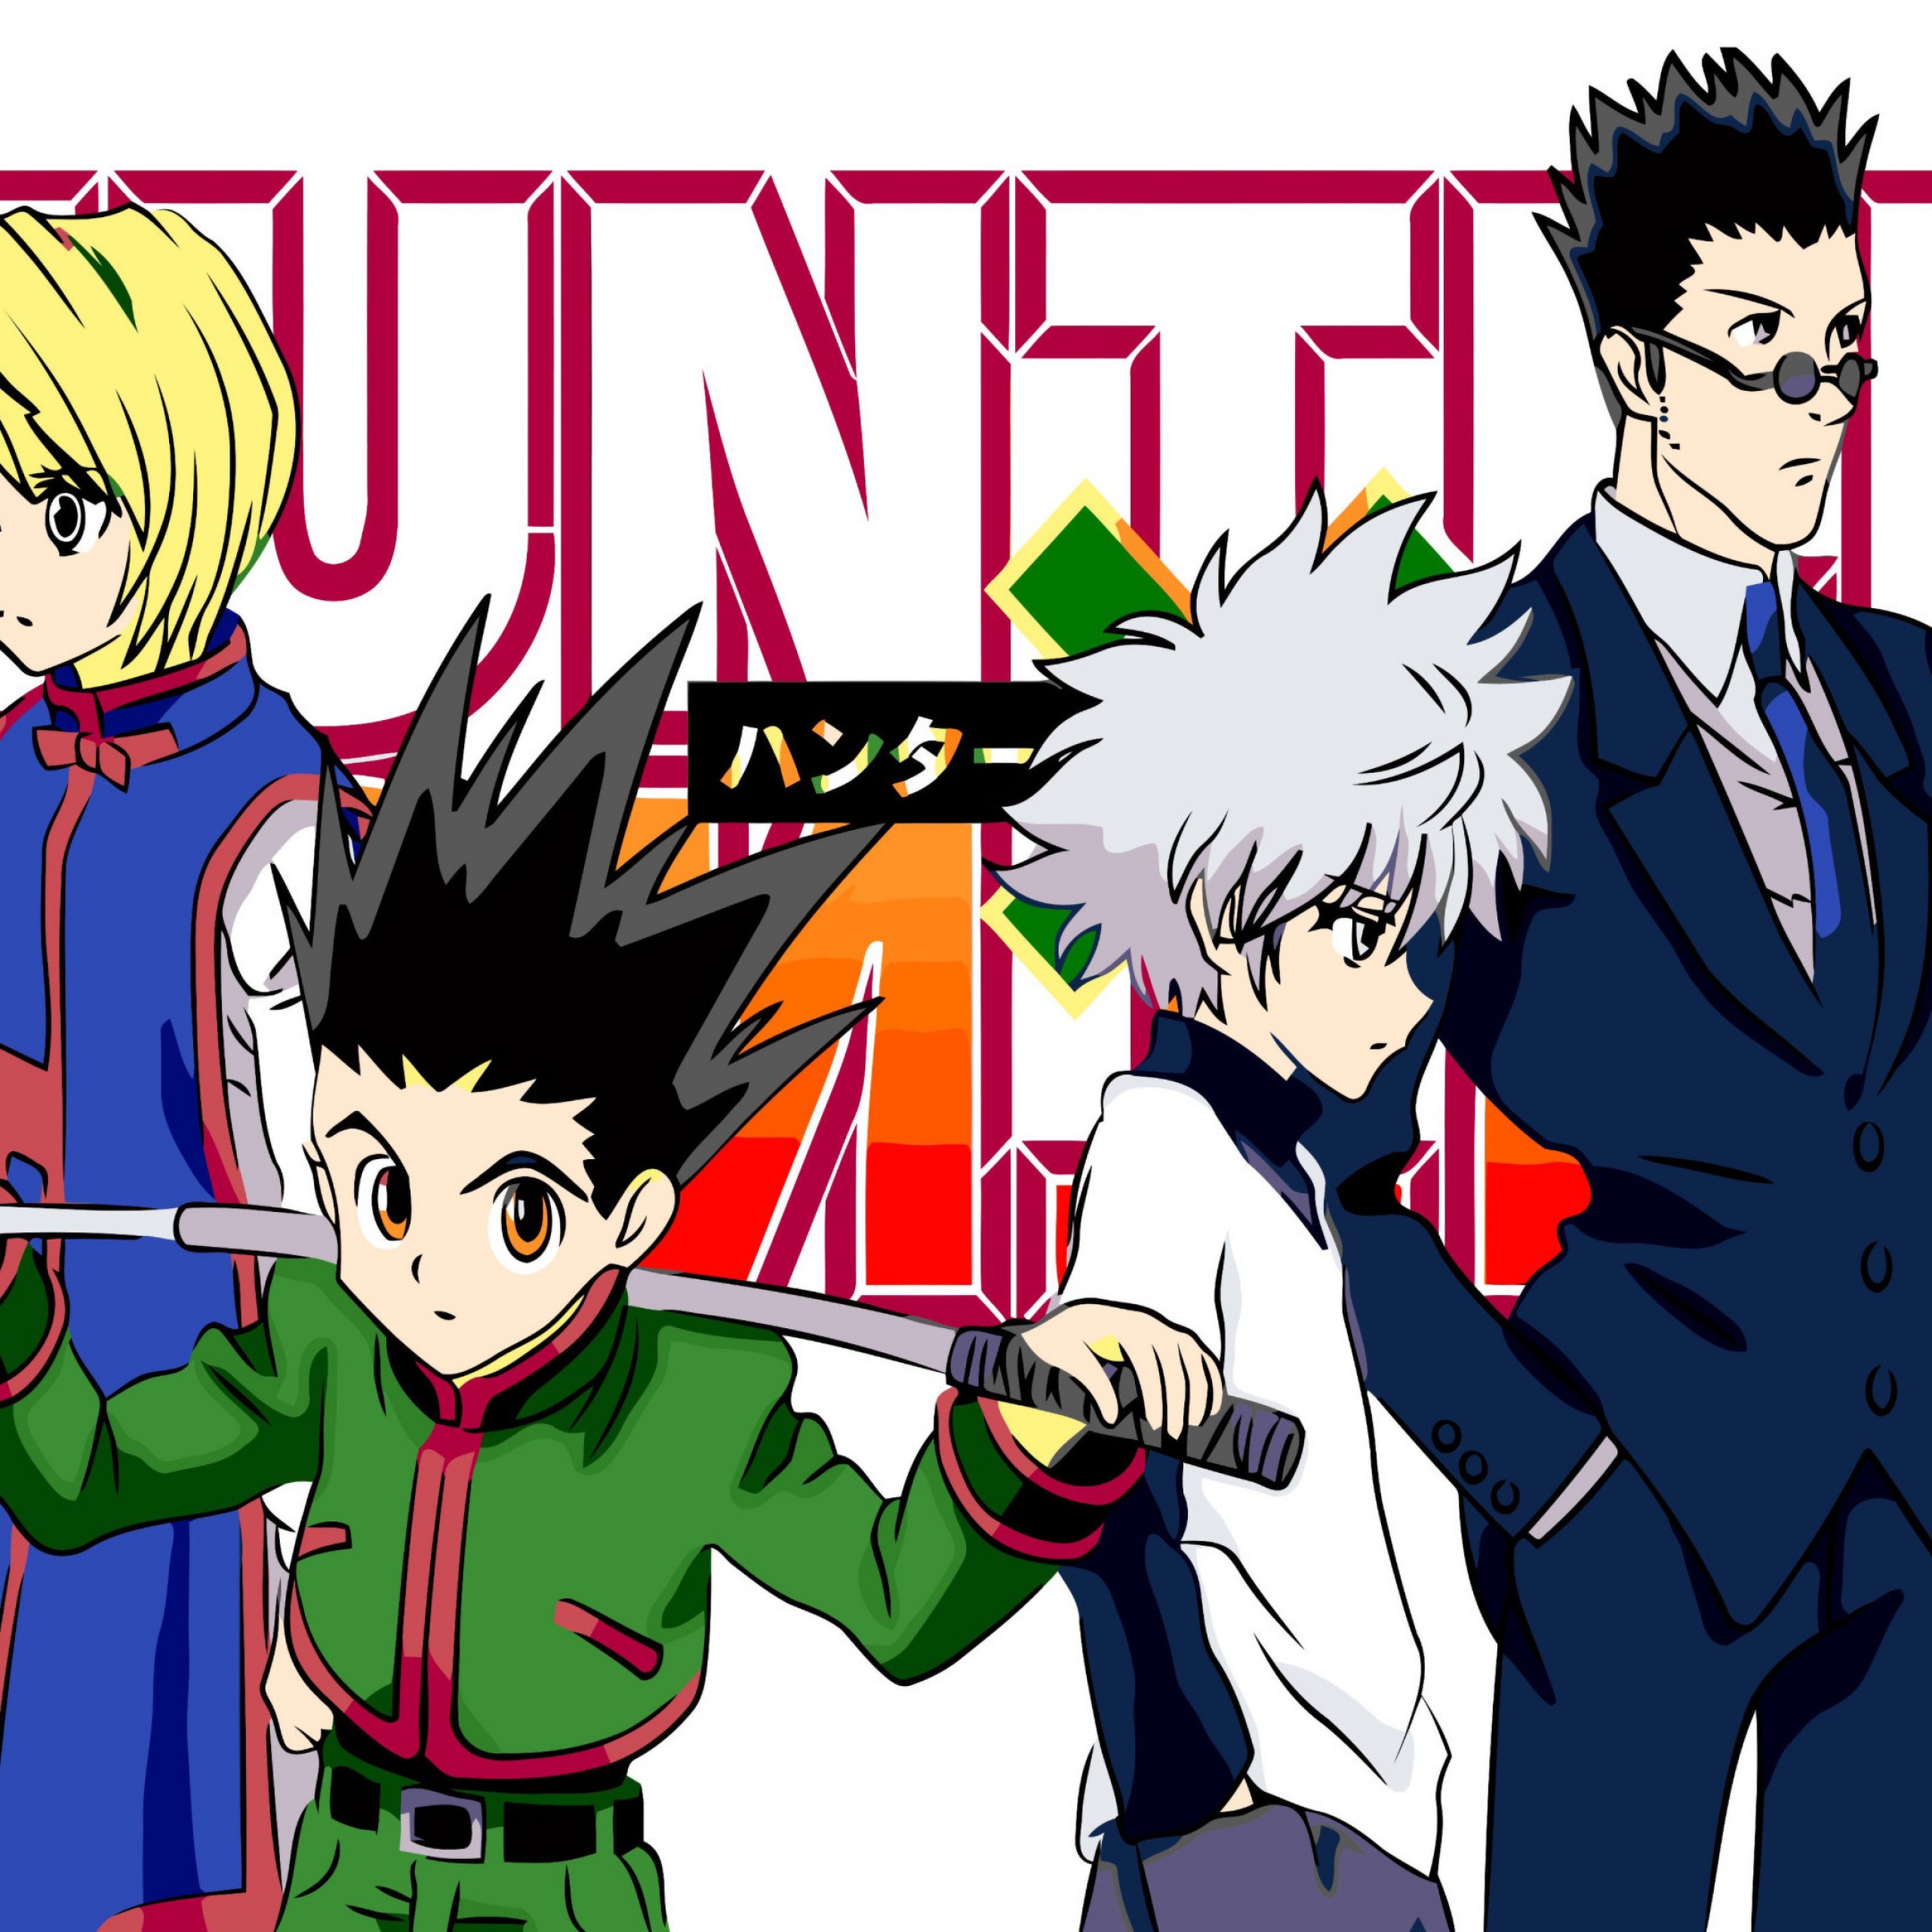 Hunter x Hunter Red Art Wallpaper, HD Anime 4K Wallpapers, Images